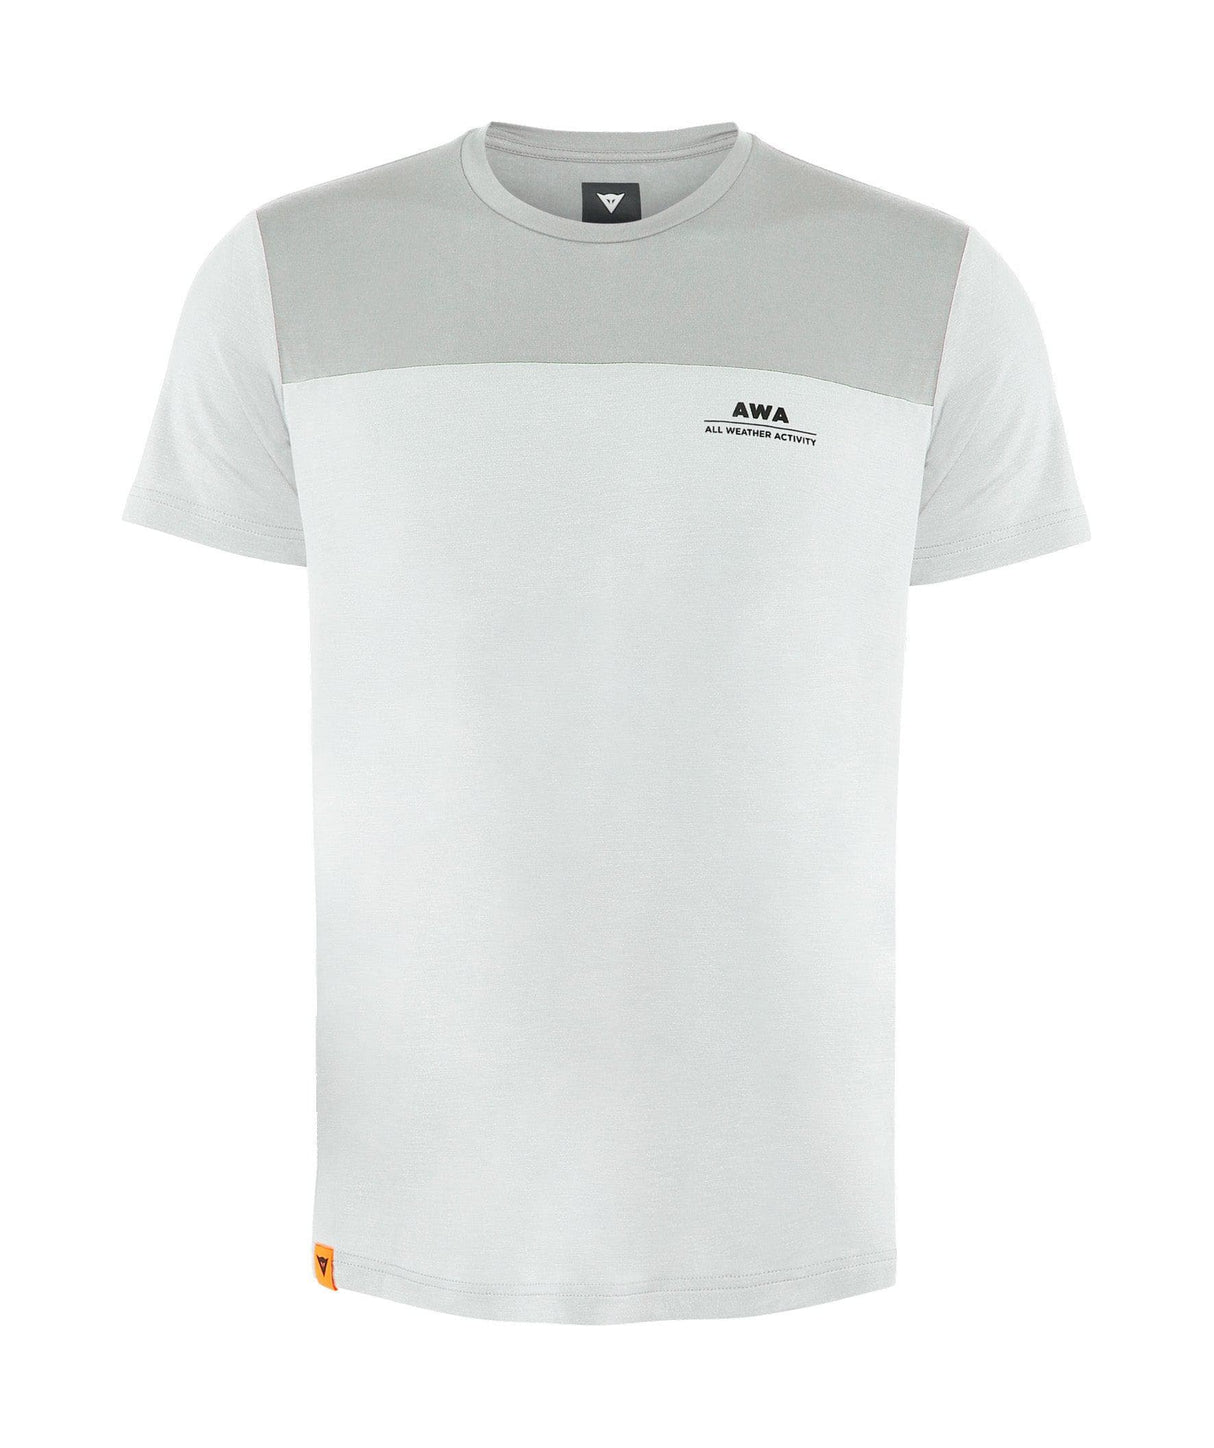 Dainese AWA BLACK Tee T-Shirt (Cool Grey, L)